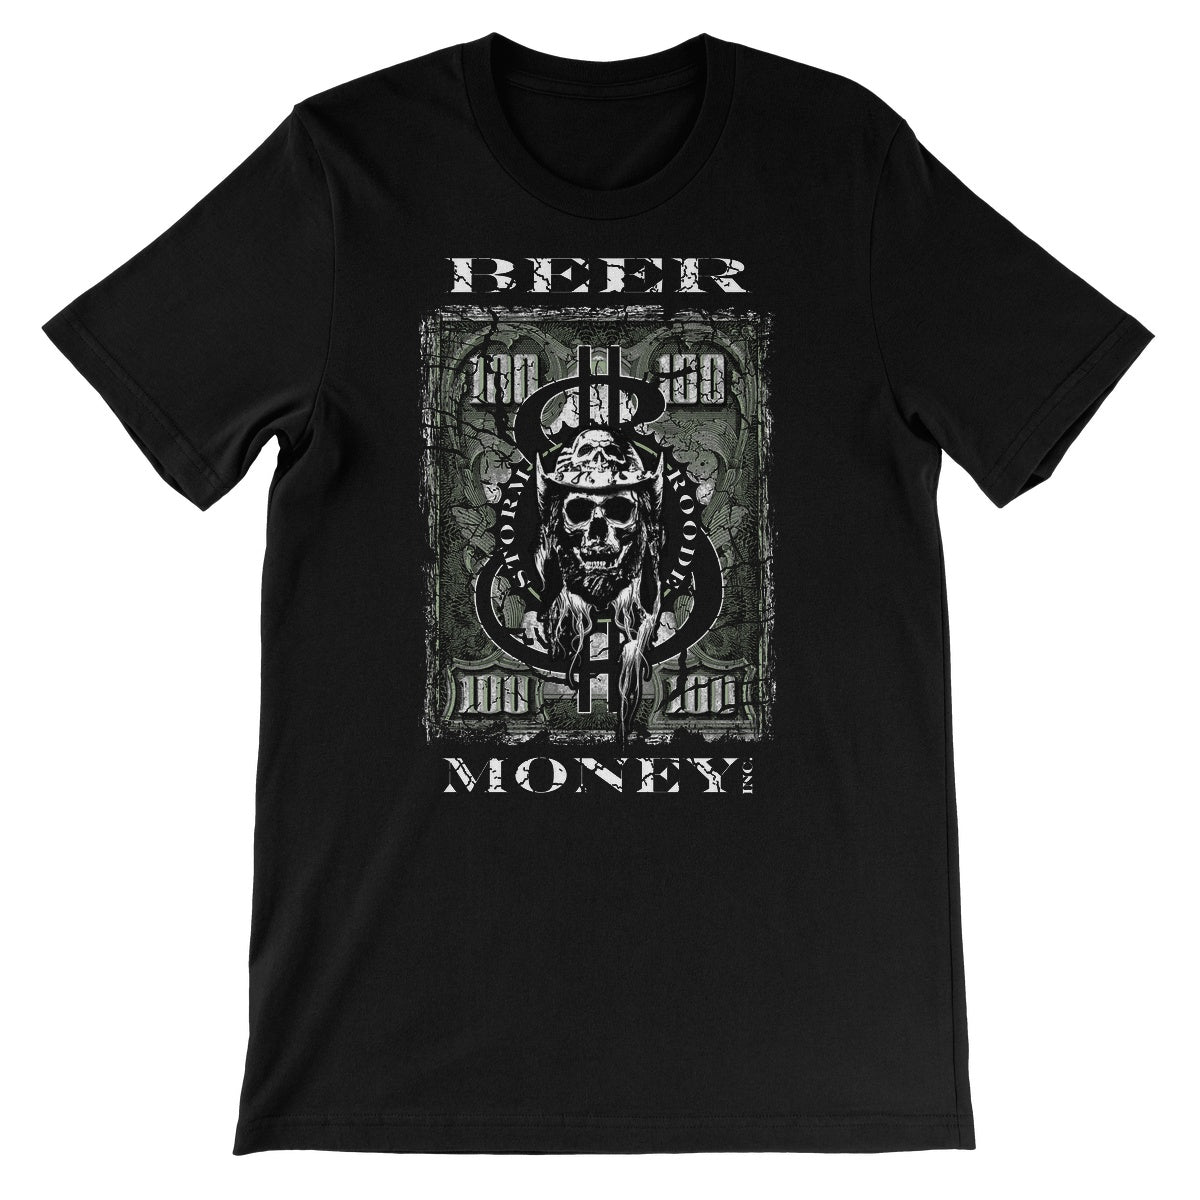 Beer Money Pints, Pounds, Drink & Rich Tour Unisex Short Sleeve T-Shirt